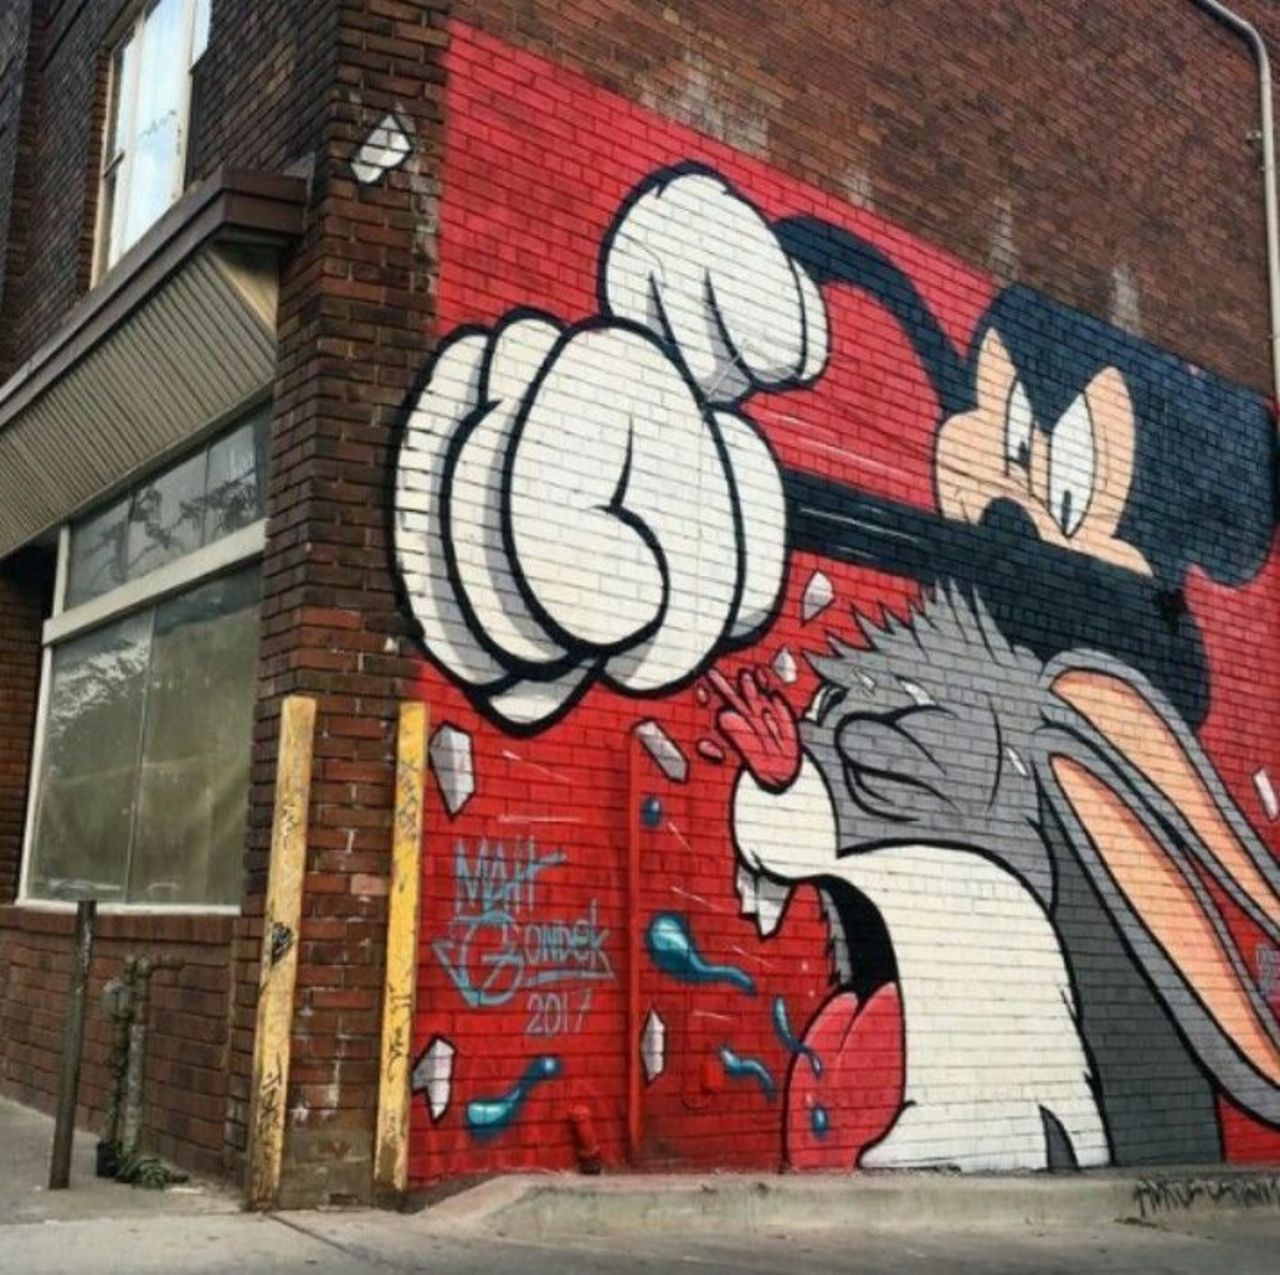 Street Art by Matt Gondek#streetart #mural #graffiti #art https://t.co/cG2VbgT5QO